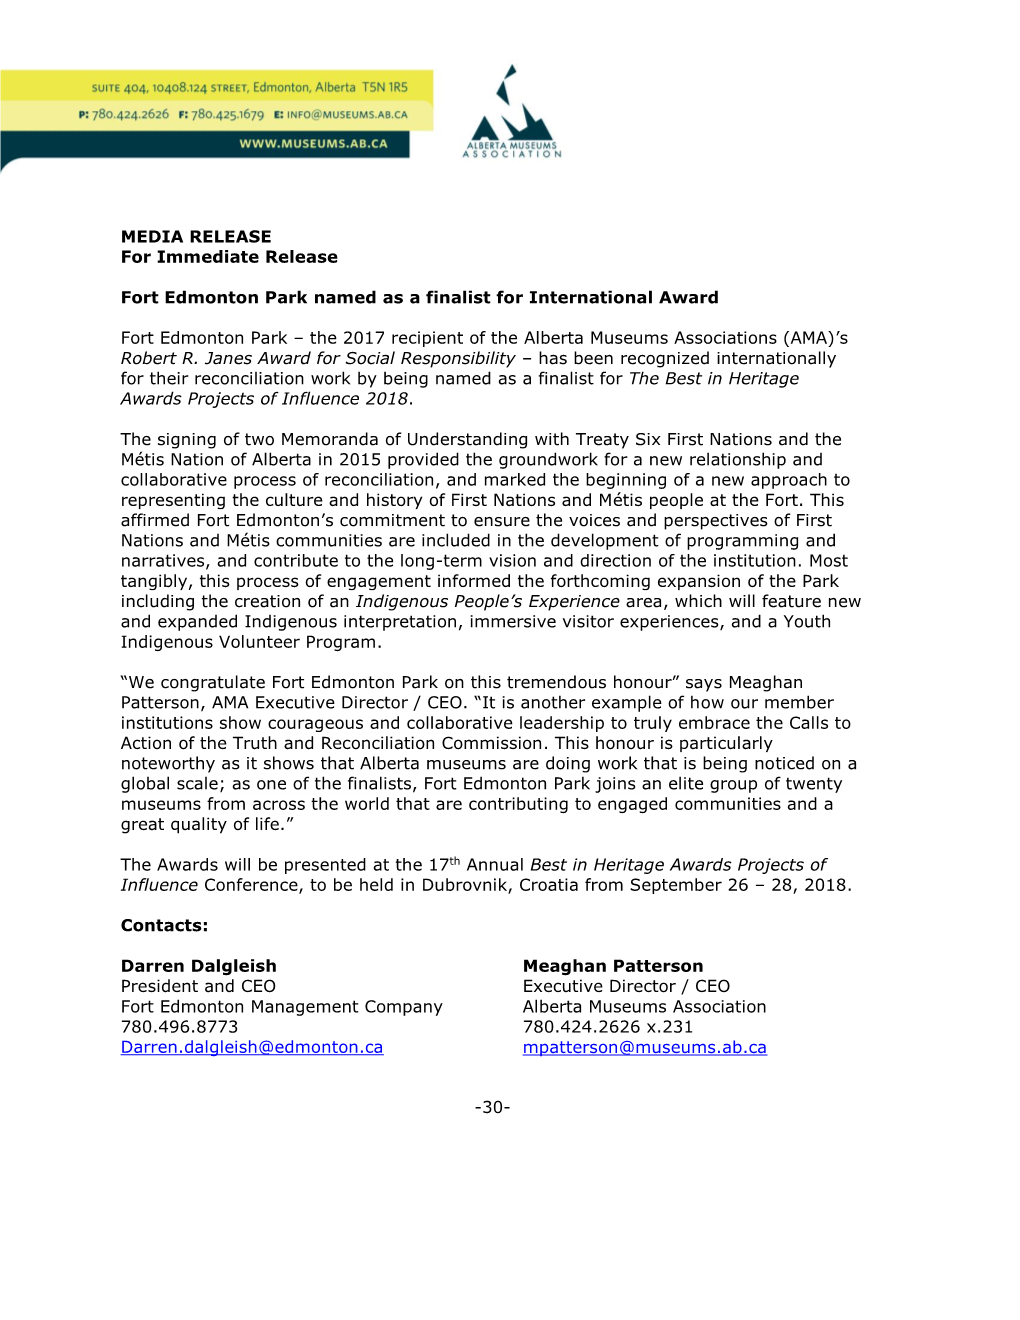 MEDIA RELEASE for Immediate Release Fort Edmonton Park